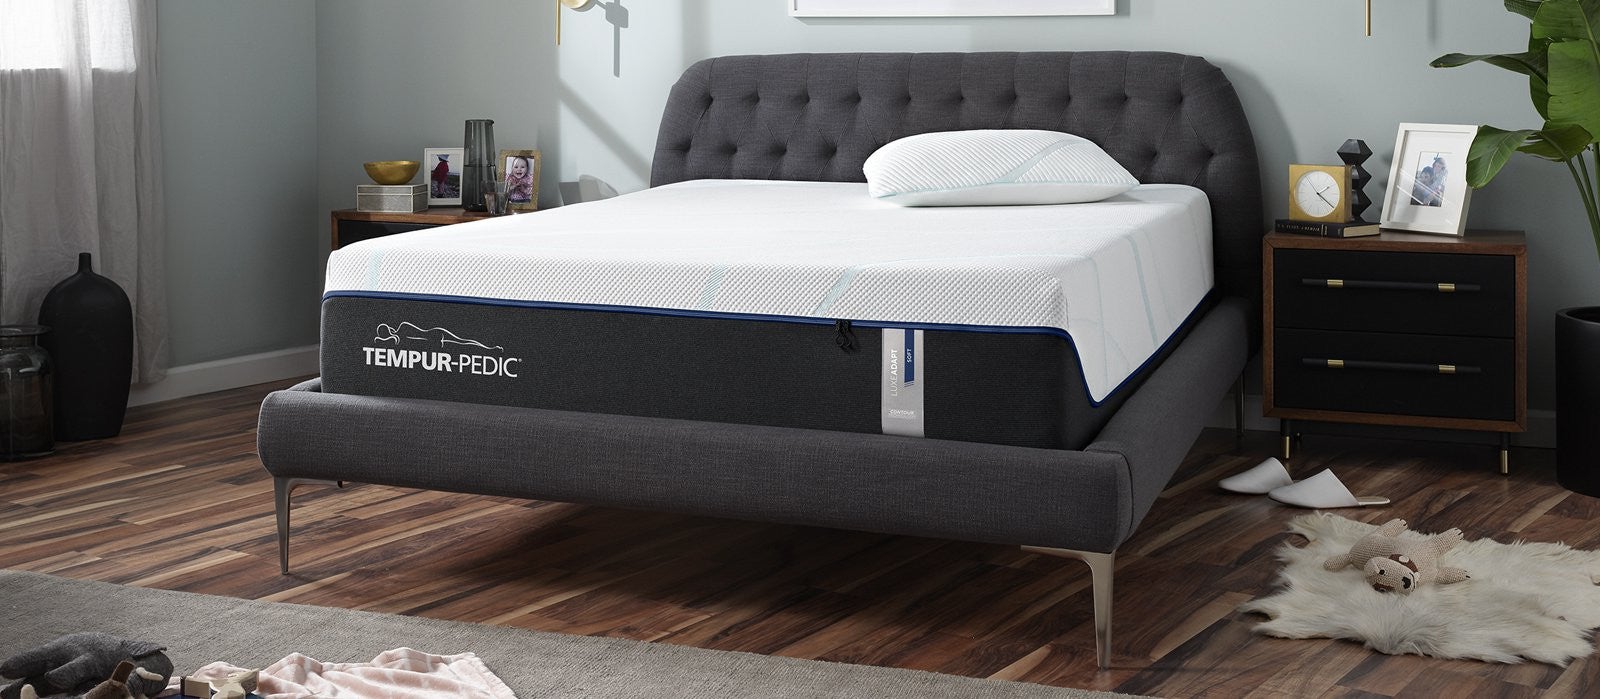 tempur-pedic mattresses full size